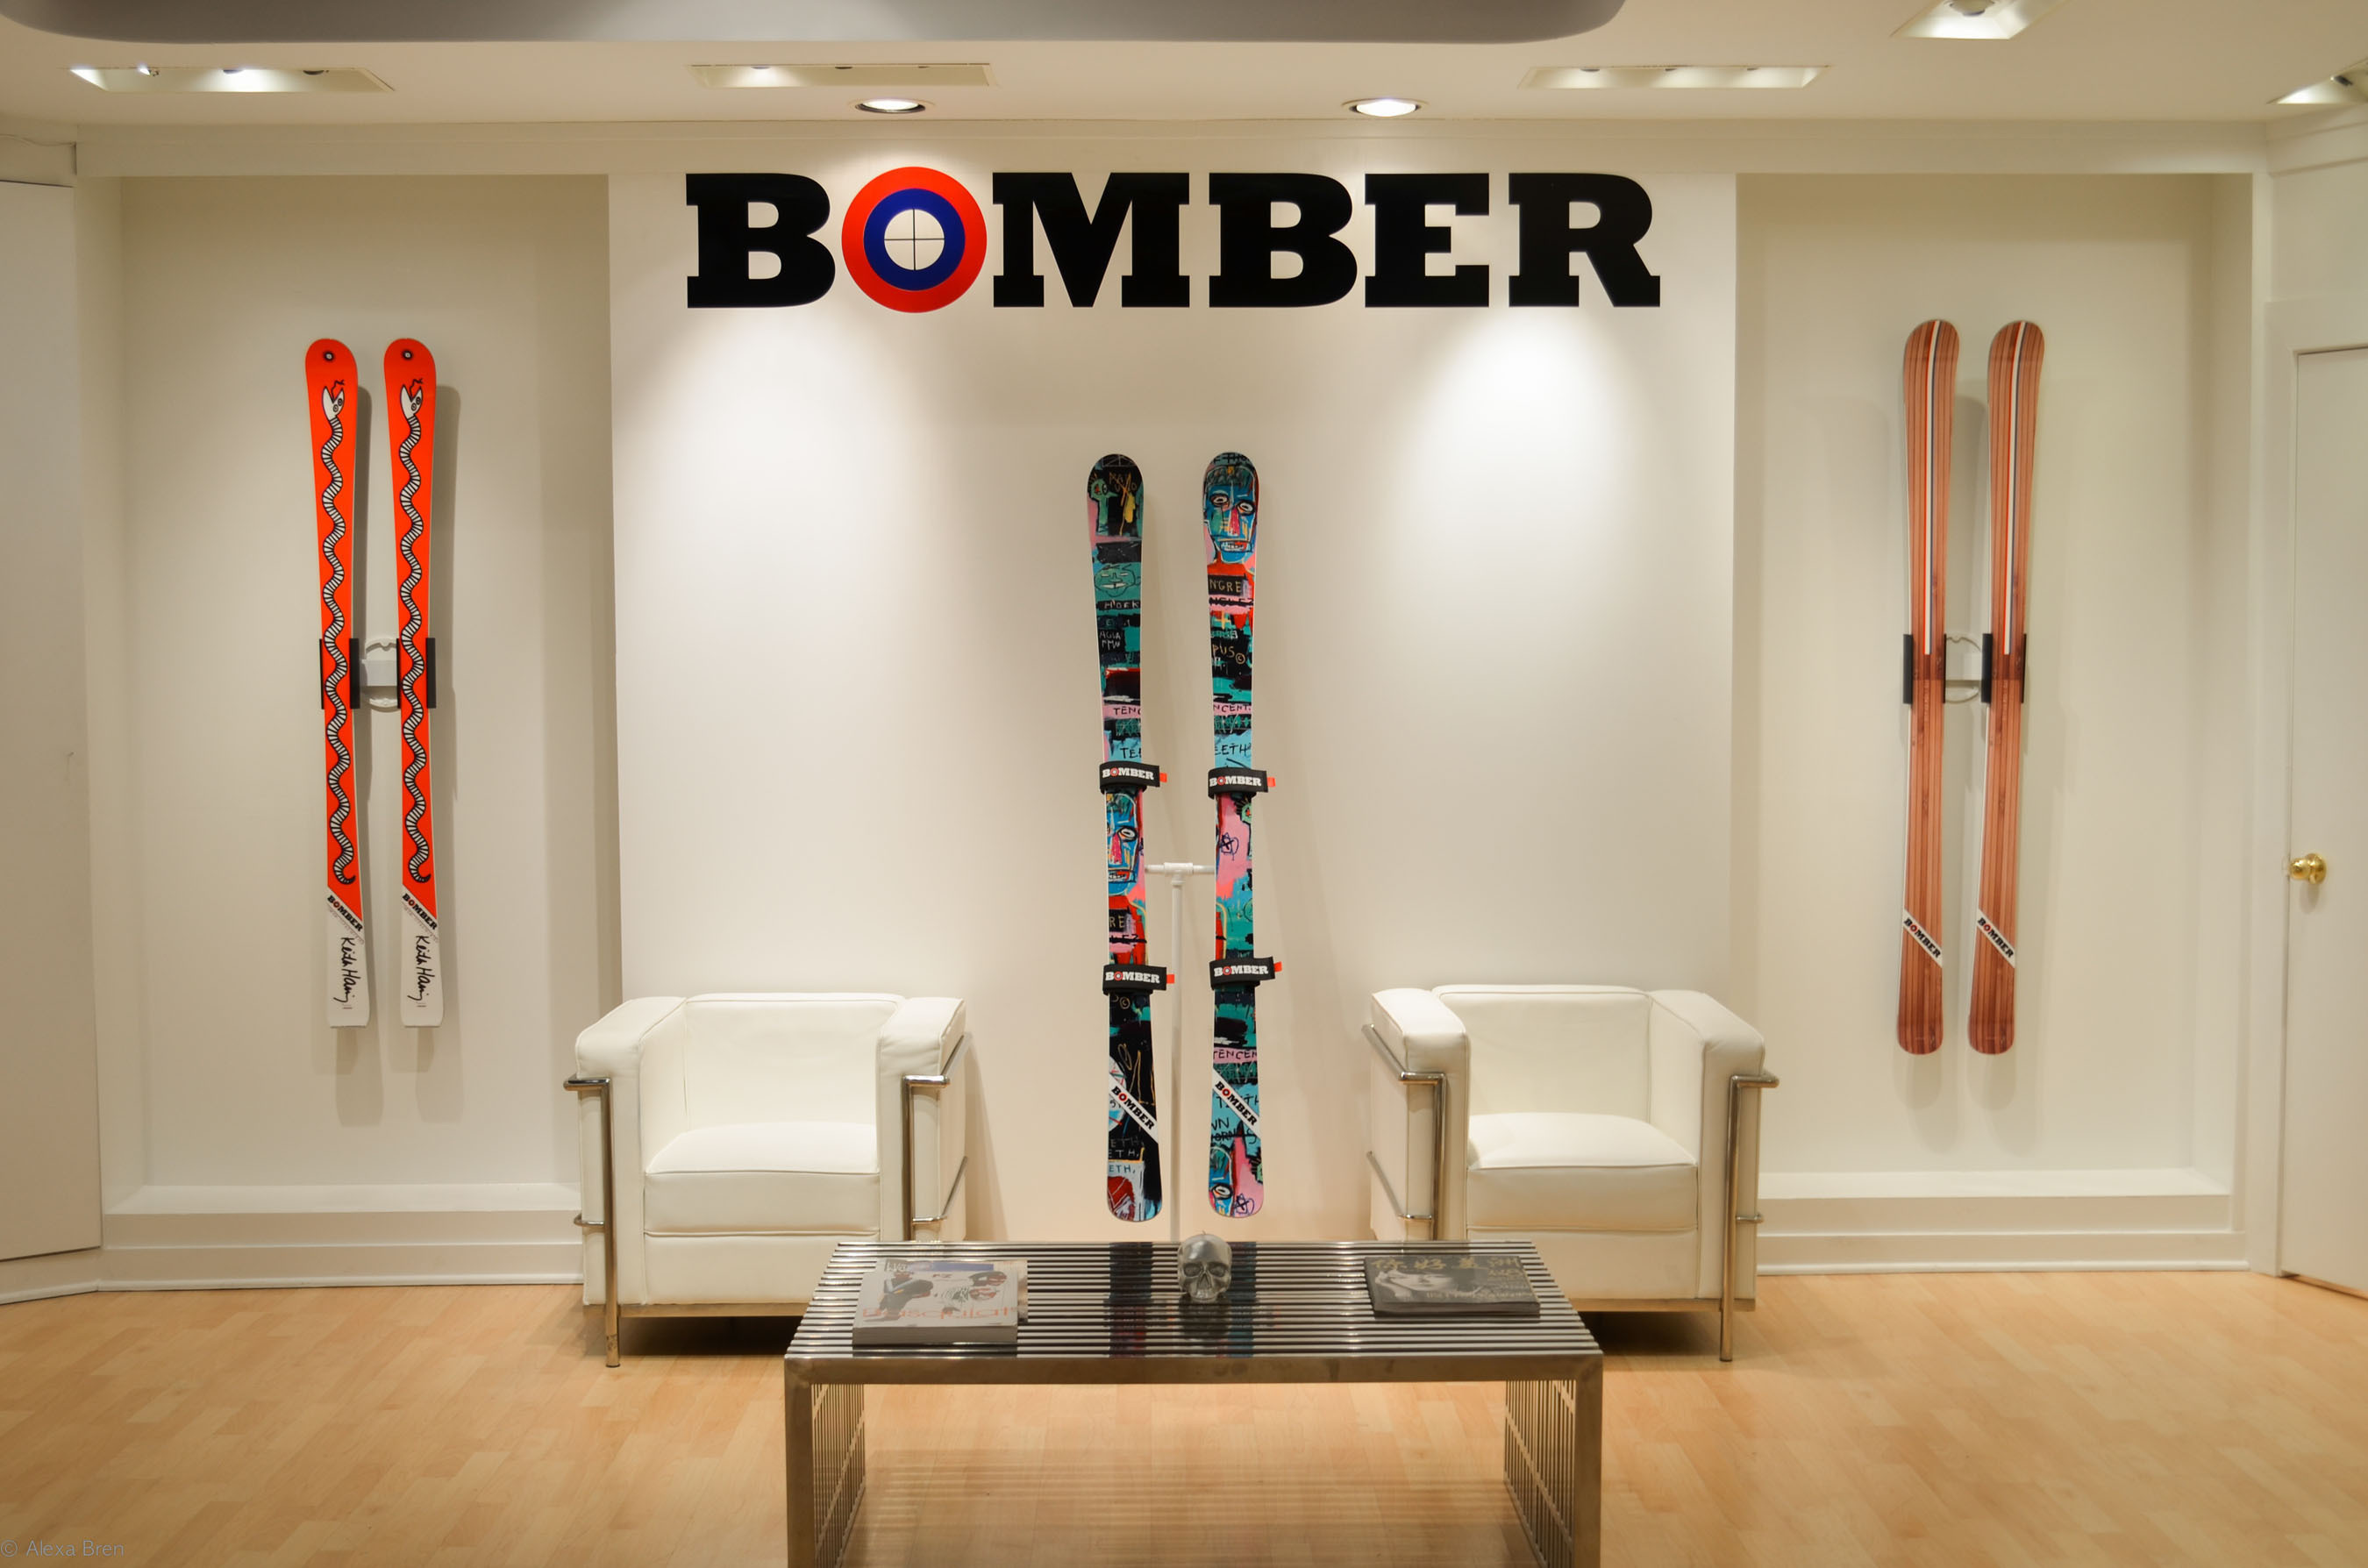 Bomber Ski Gallery and Store Photo. (PRNewsFoto/Bomber LLC) (PRNewsFoto/BOMBER LLC)